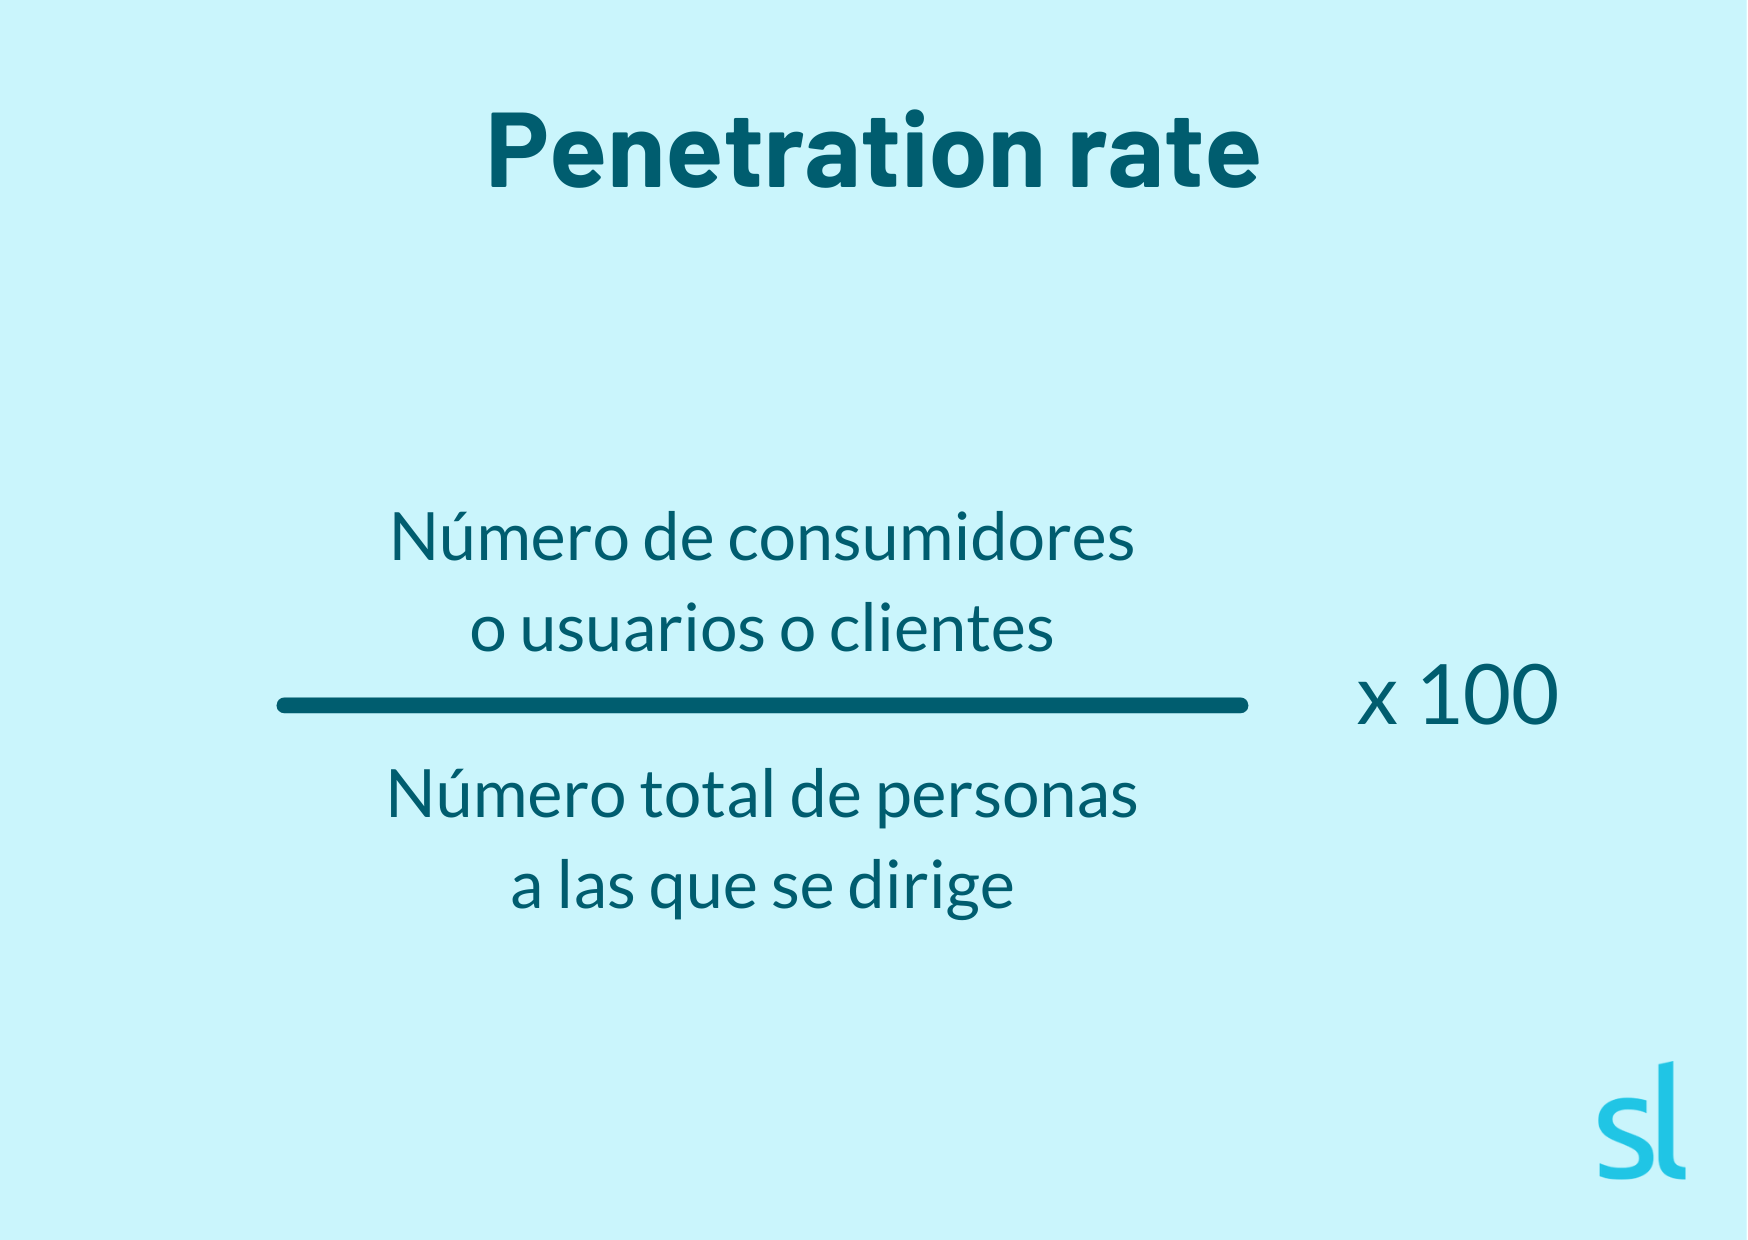 cálculo penetration rate